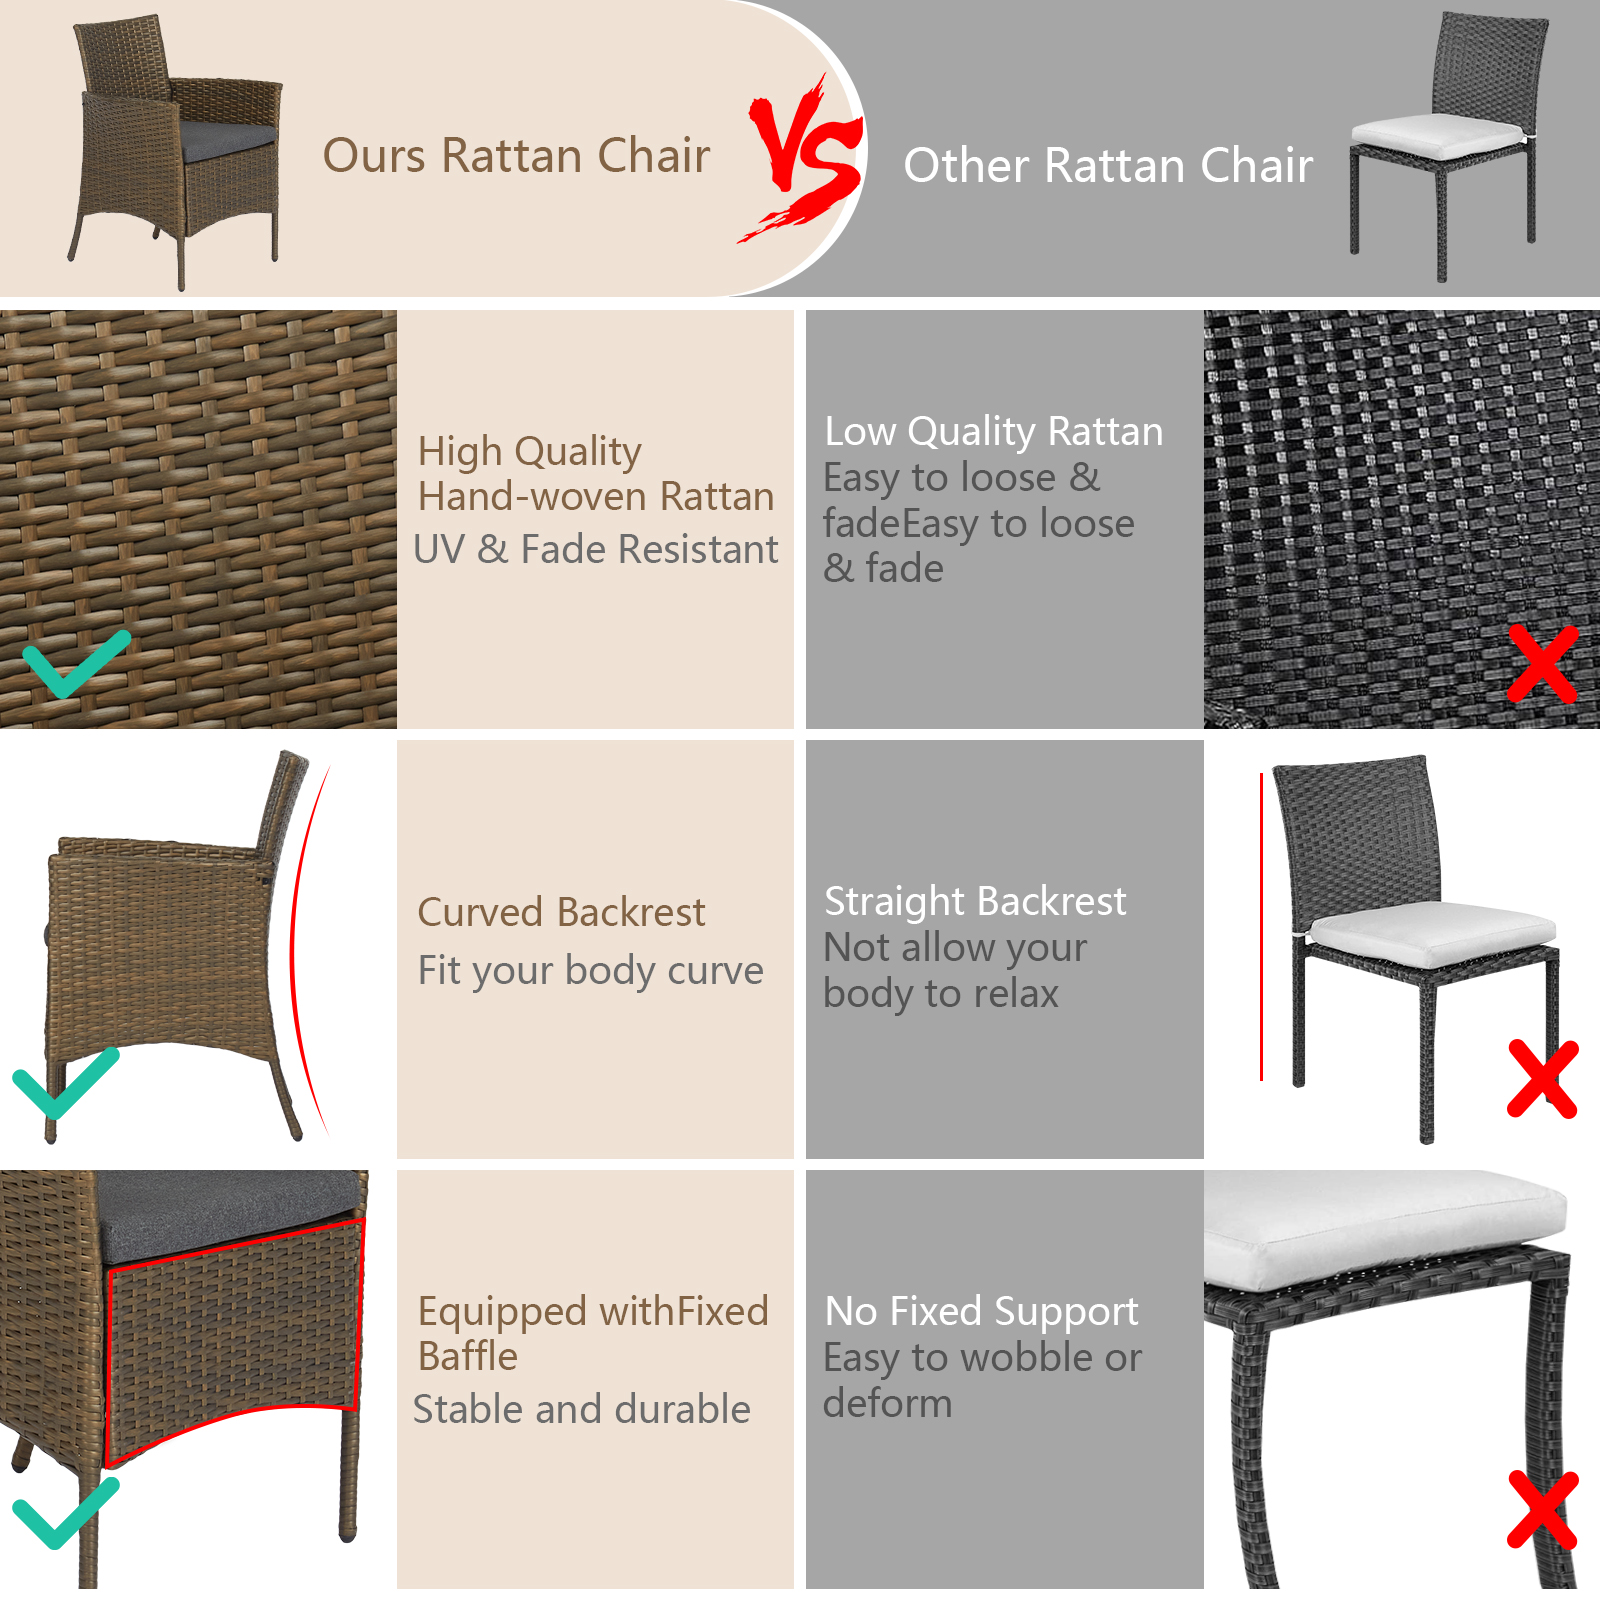 Kinbor 3pcs Rattan Wicker Chair Set with Side Table, Dark Grey - image 4 of 7